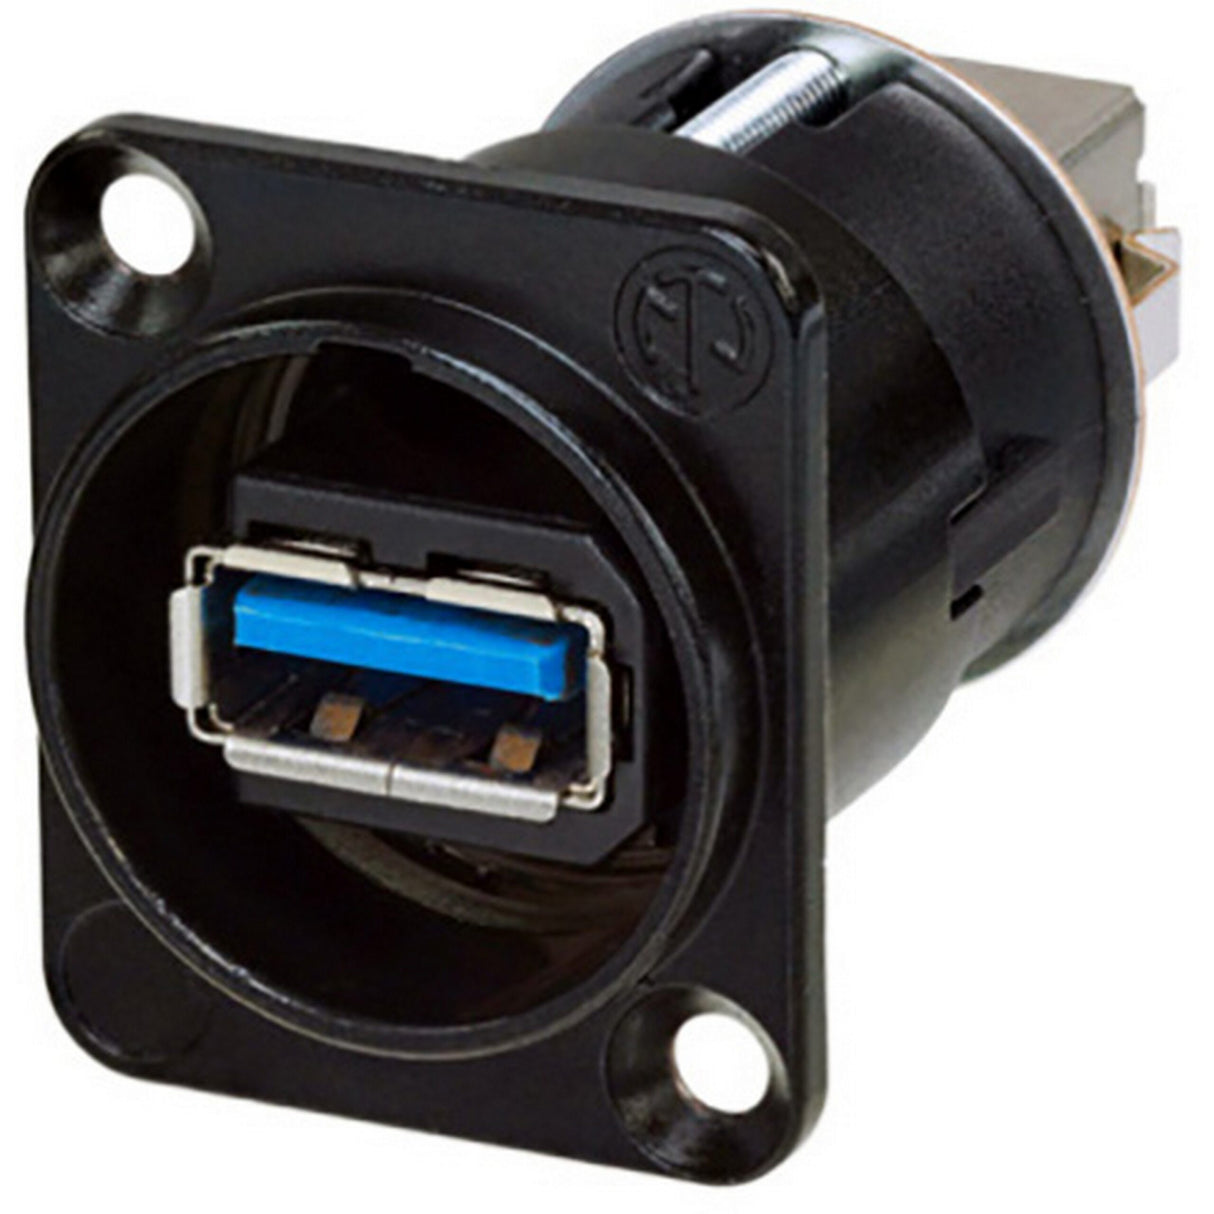 Neutrik NAUSB3-B Feed Through USB 3.0 Compatible Adapter, Reversible, Black